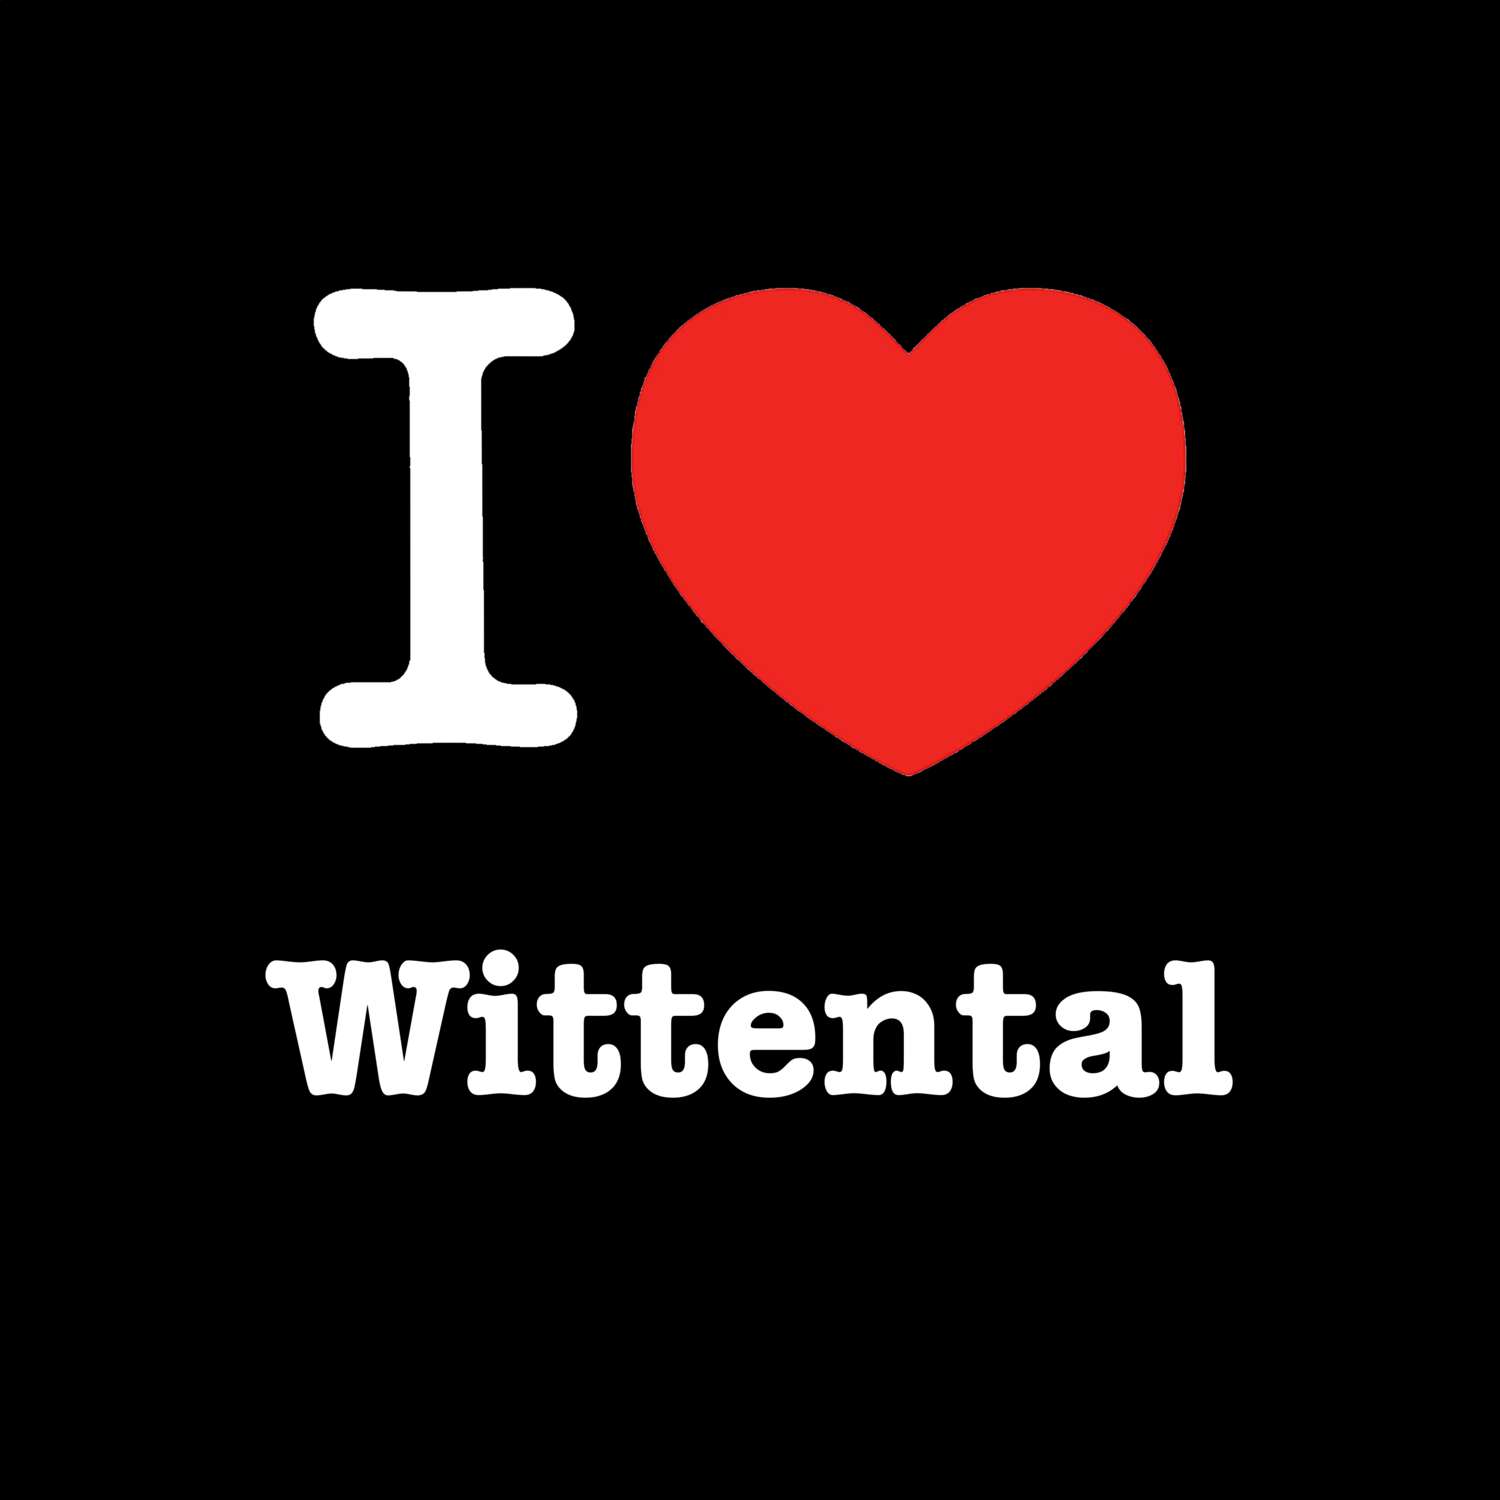 Wittental T-Shirt »I love«